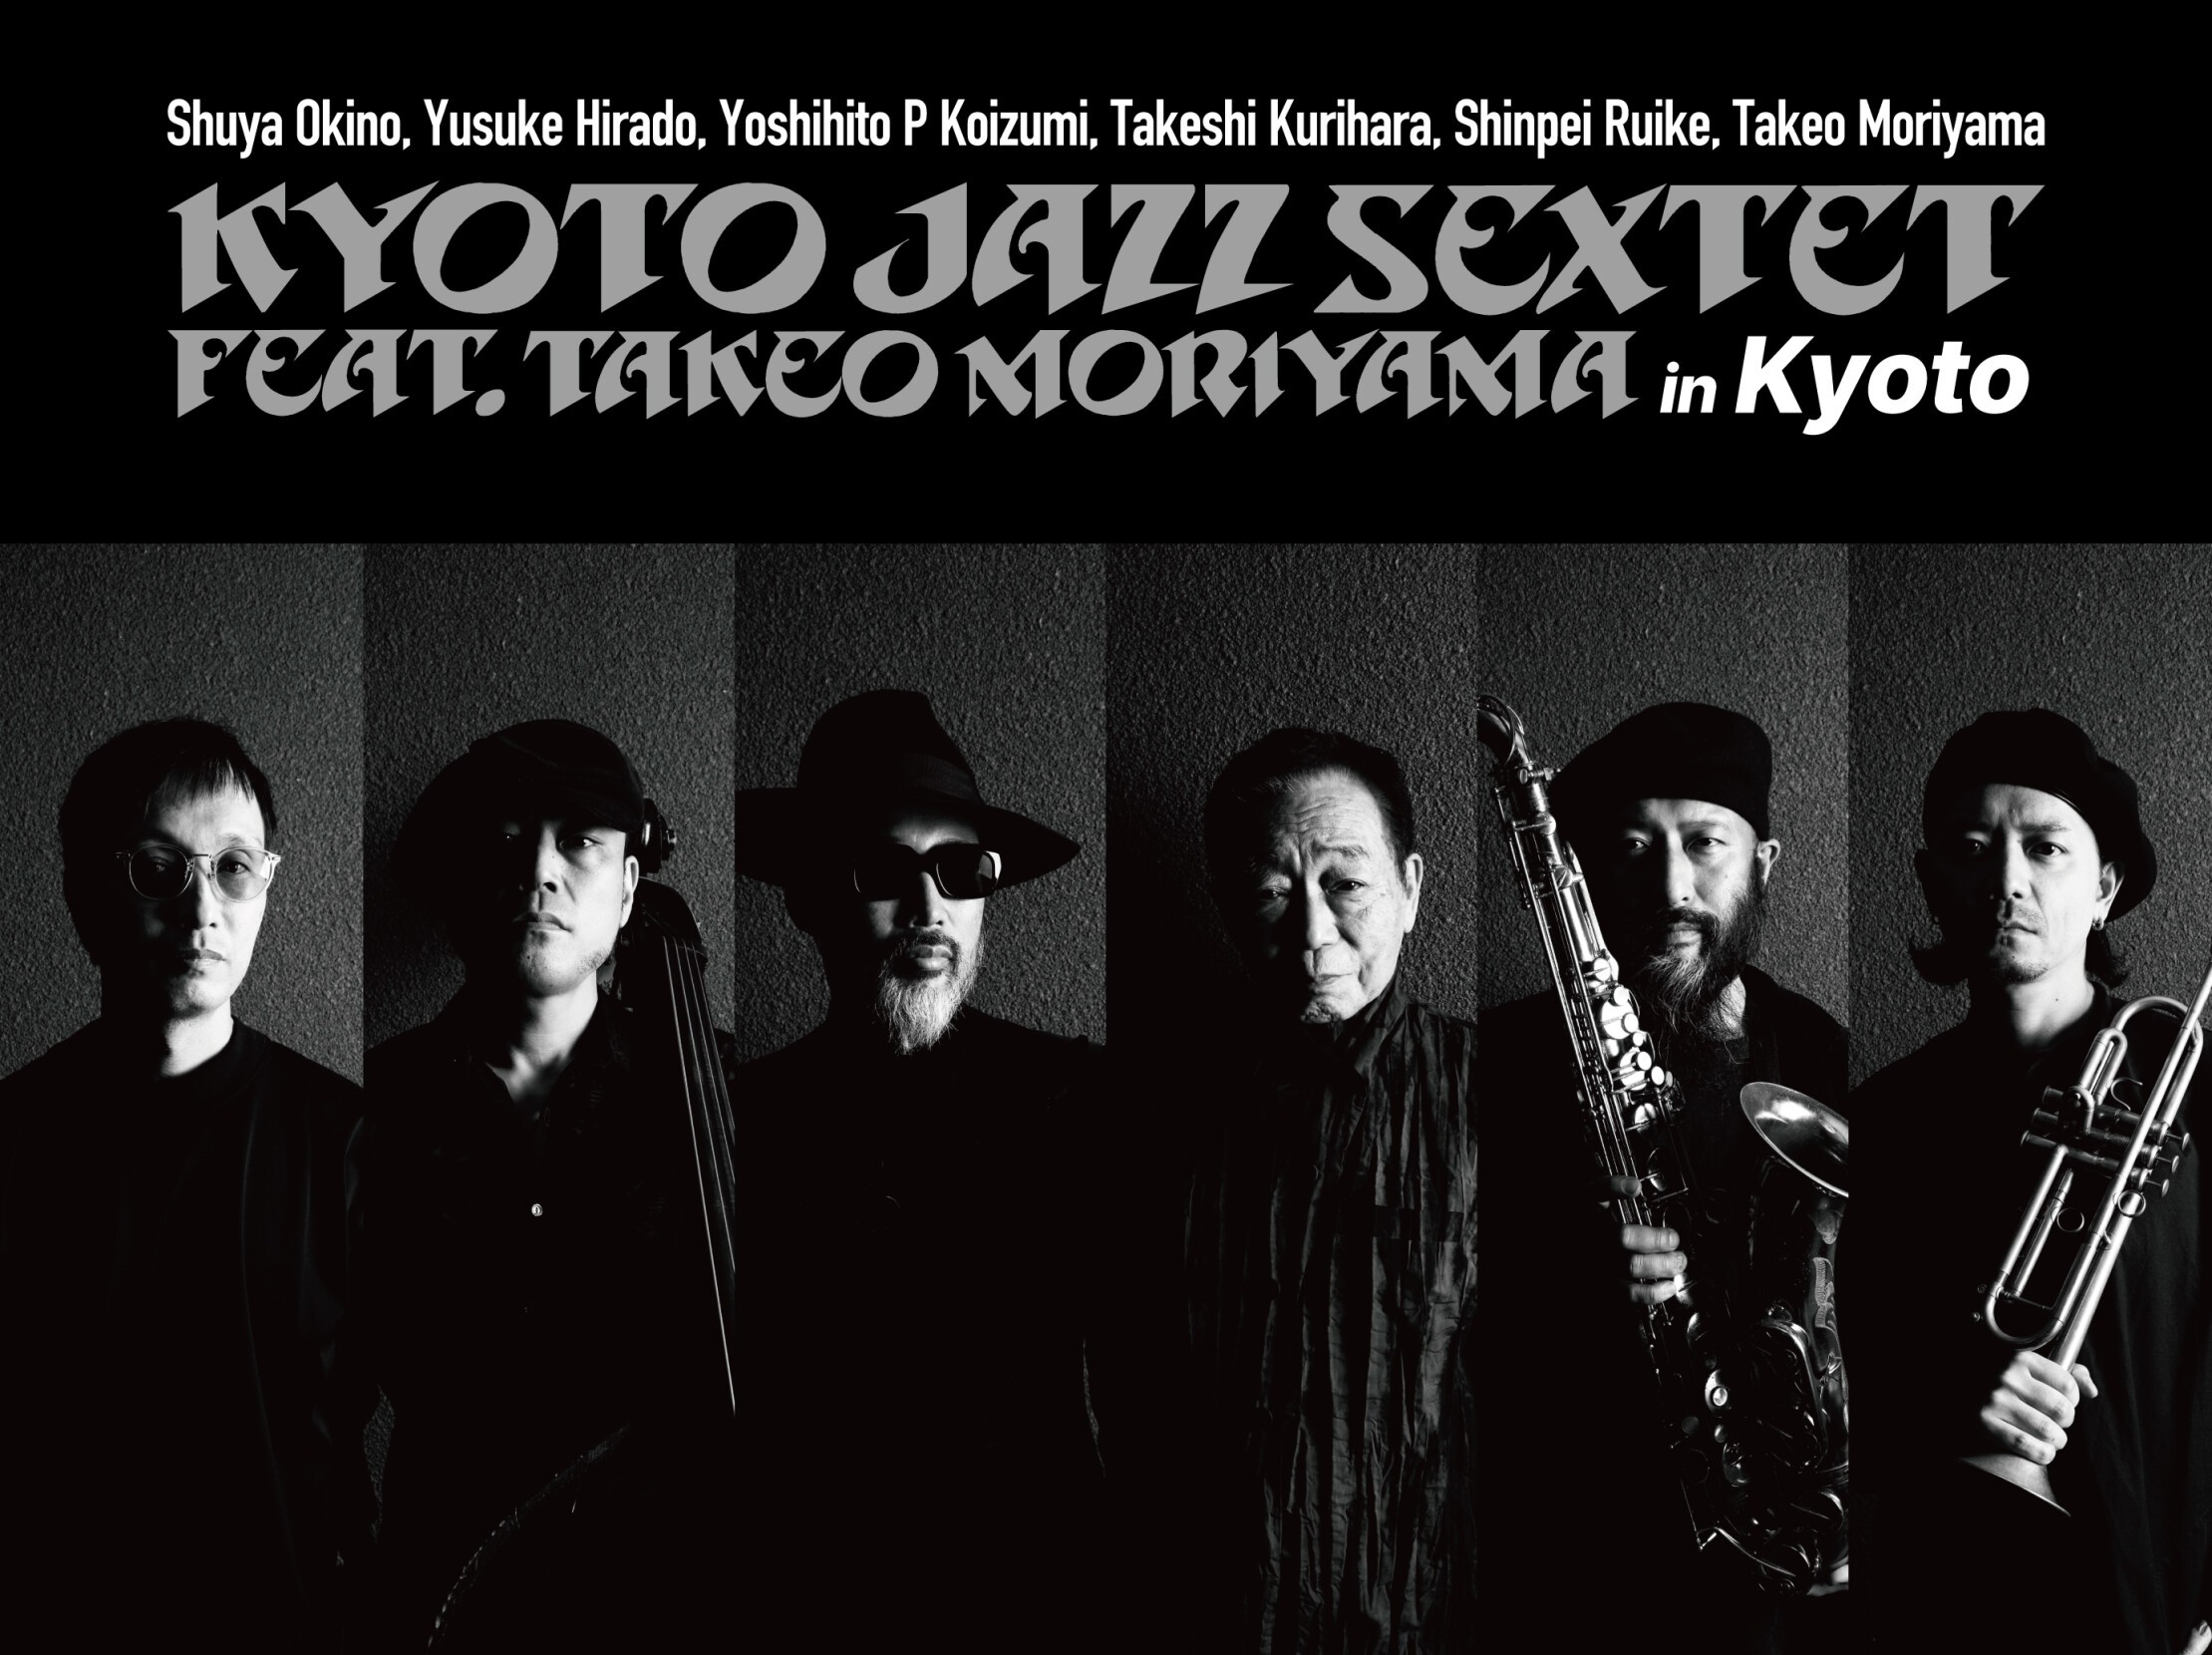 KYOTO JAZZ SEXTET feat. TAKEO MORIYAMA Live in Kyoto | Kyoto Jazzy